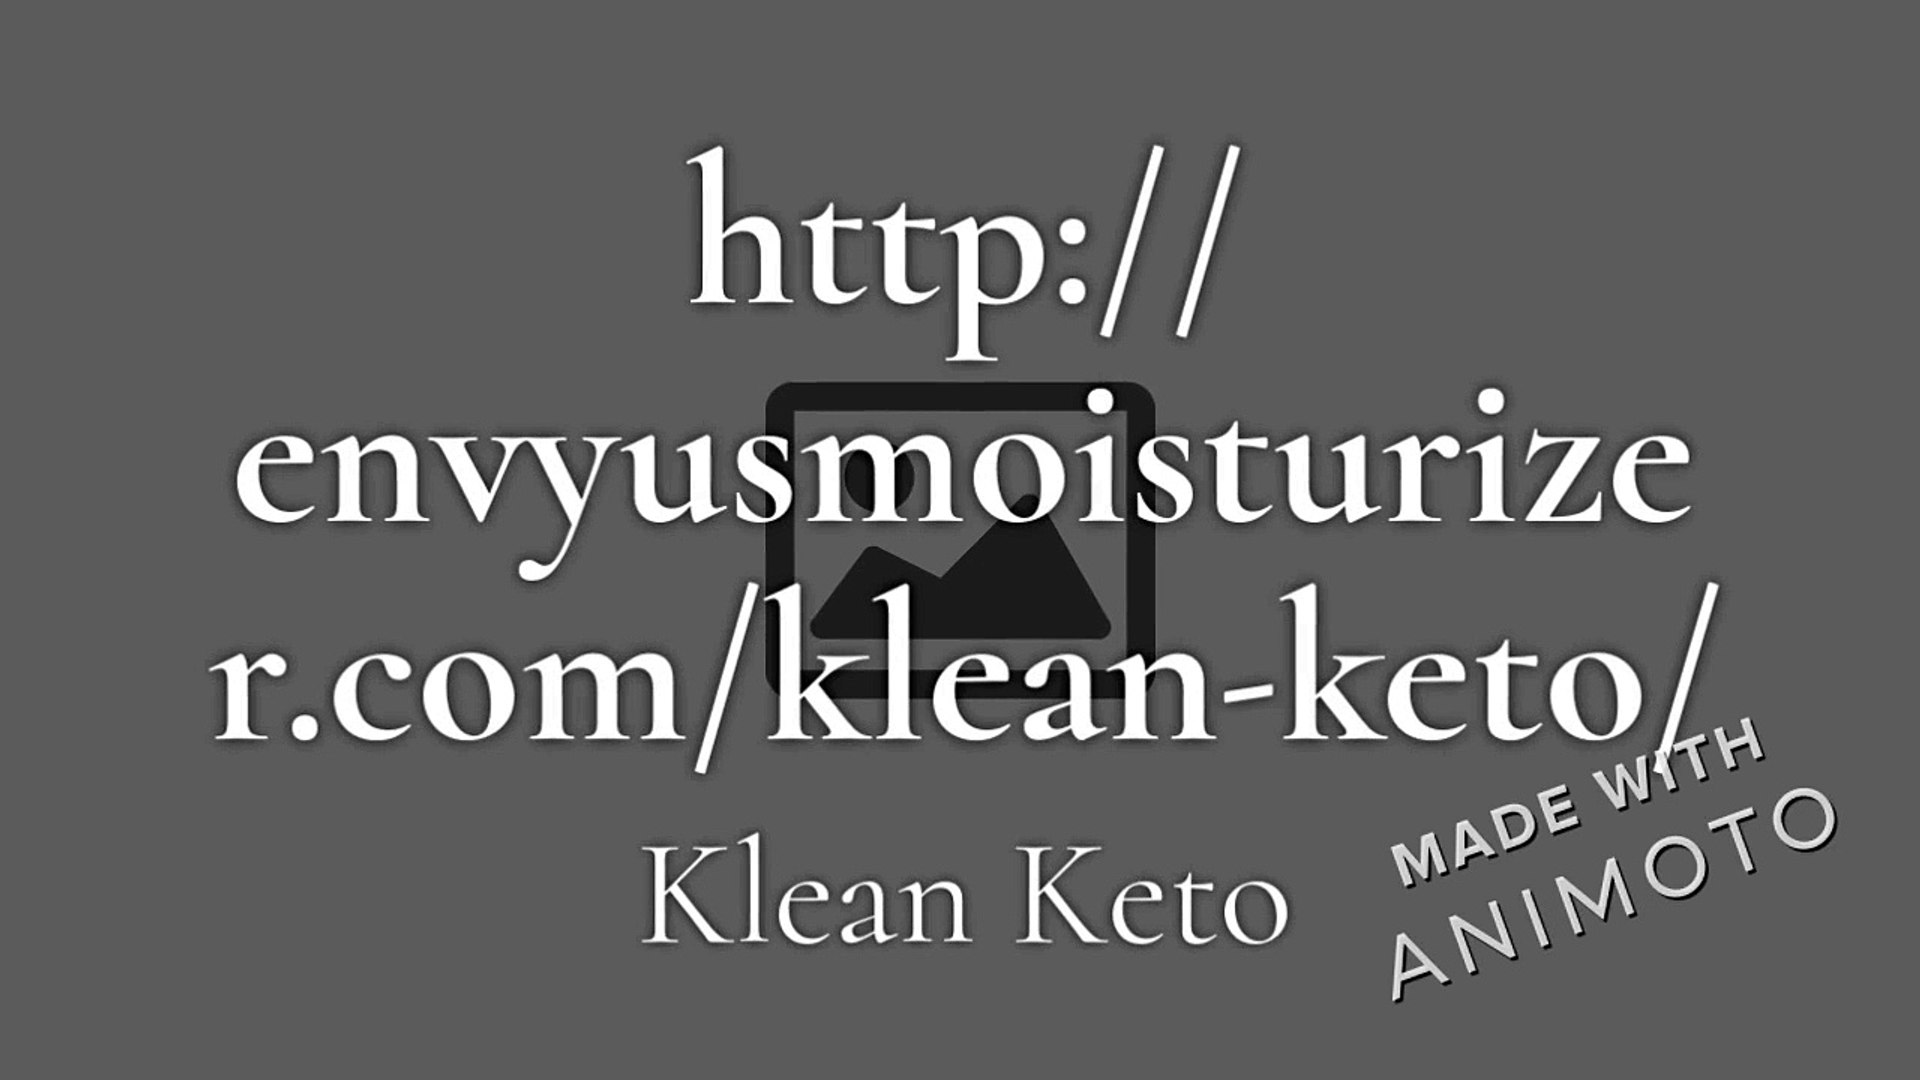 Klean Keto - Fat Burning With Keto!